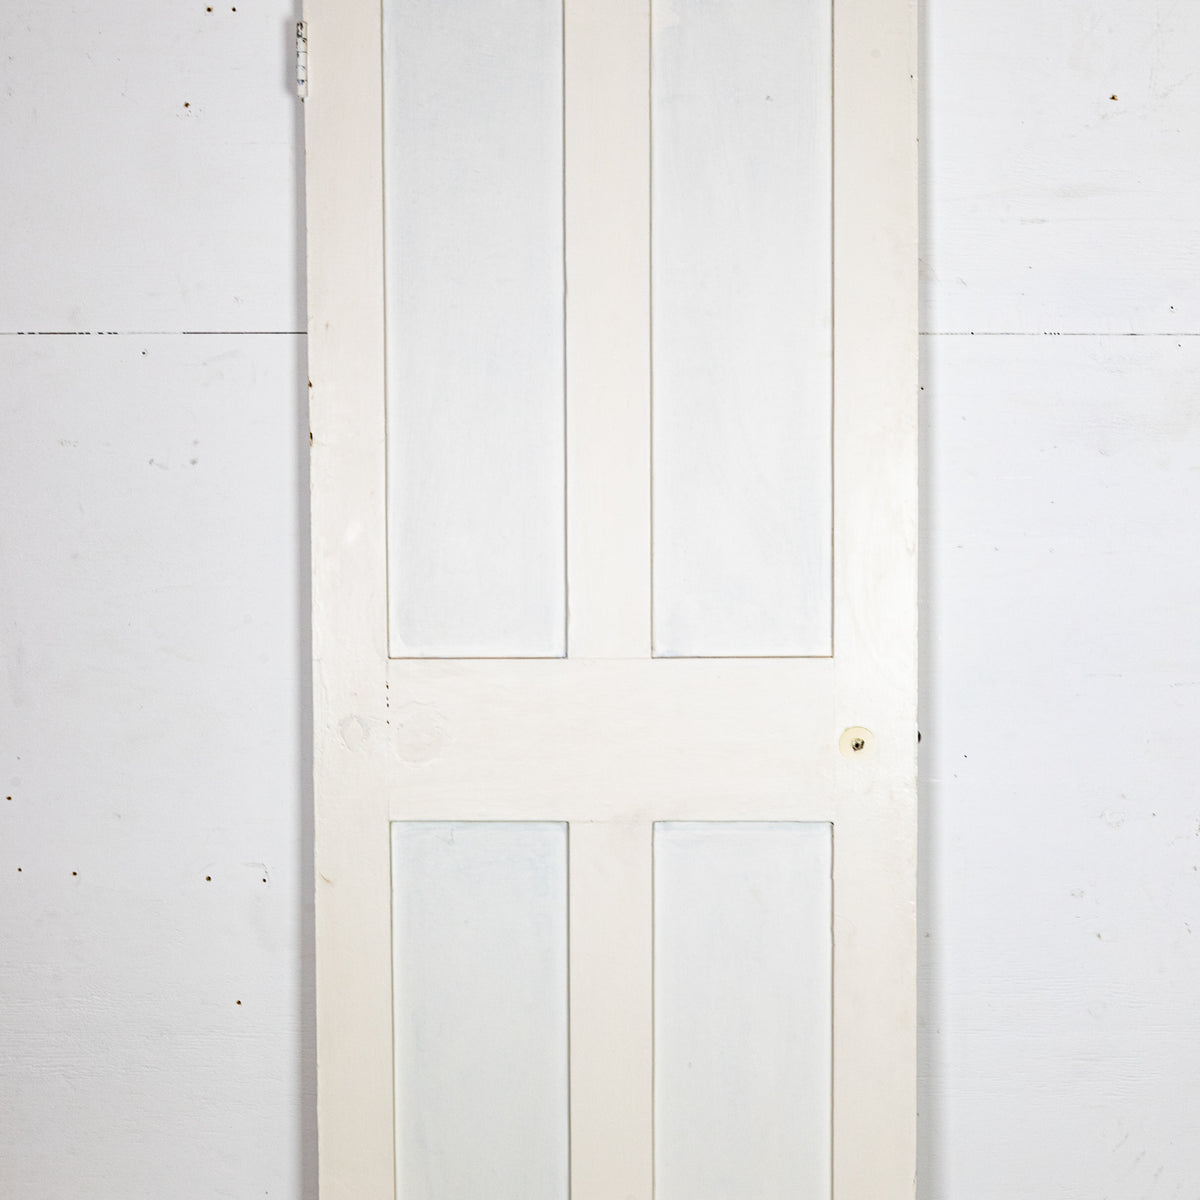 Antique Victorian 4 Panel Door - 172.5 x 64.5cm | The Architectural Forum